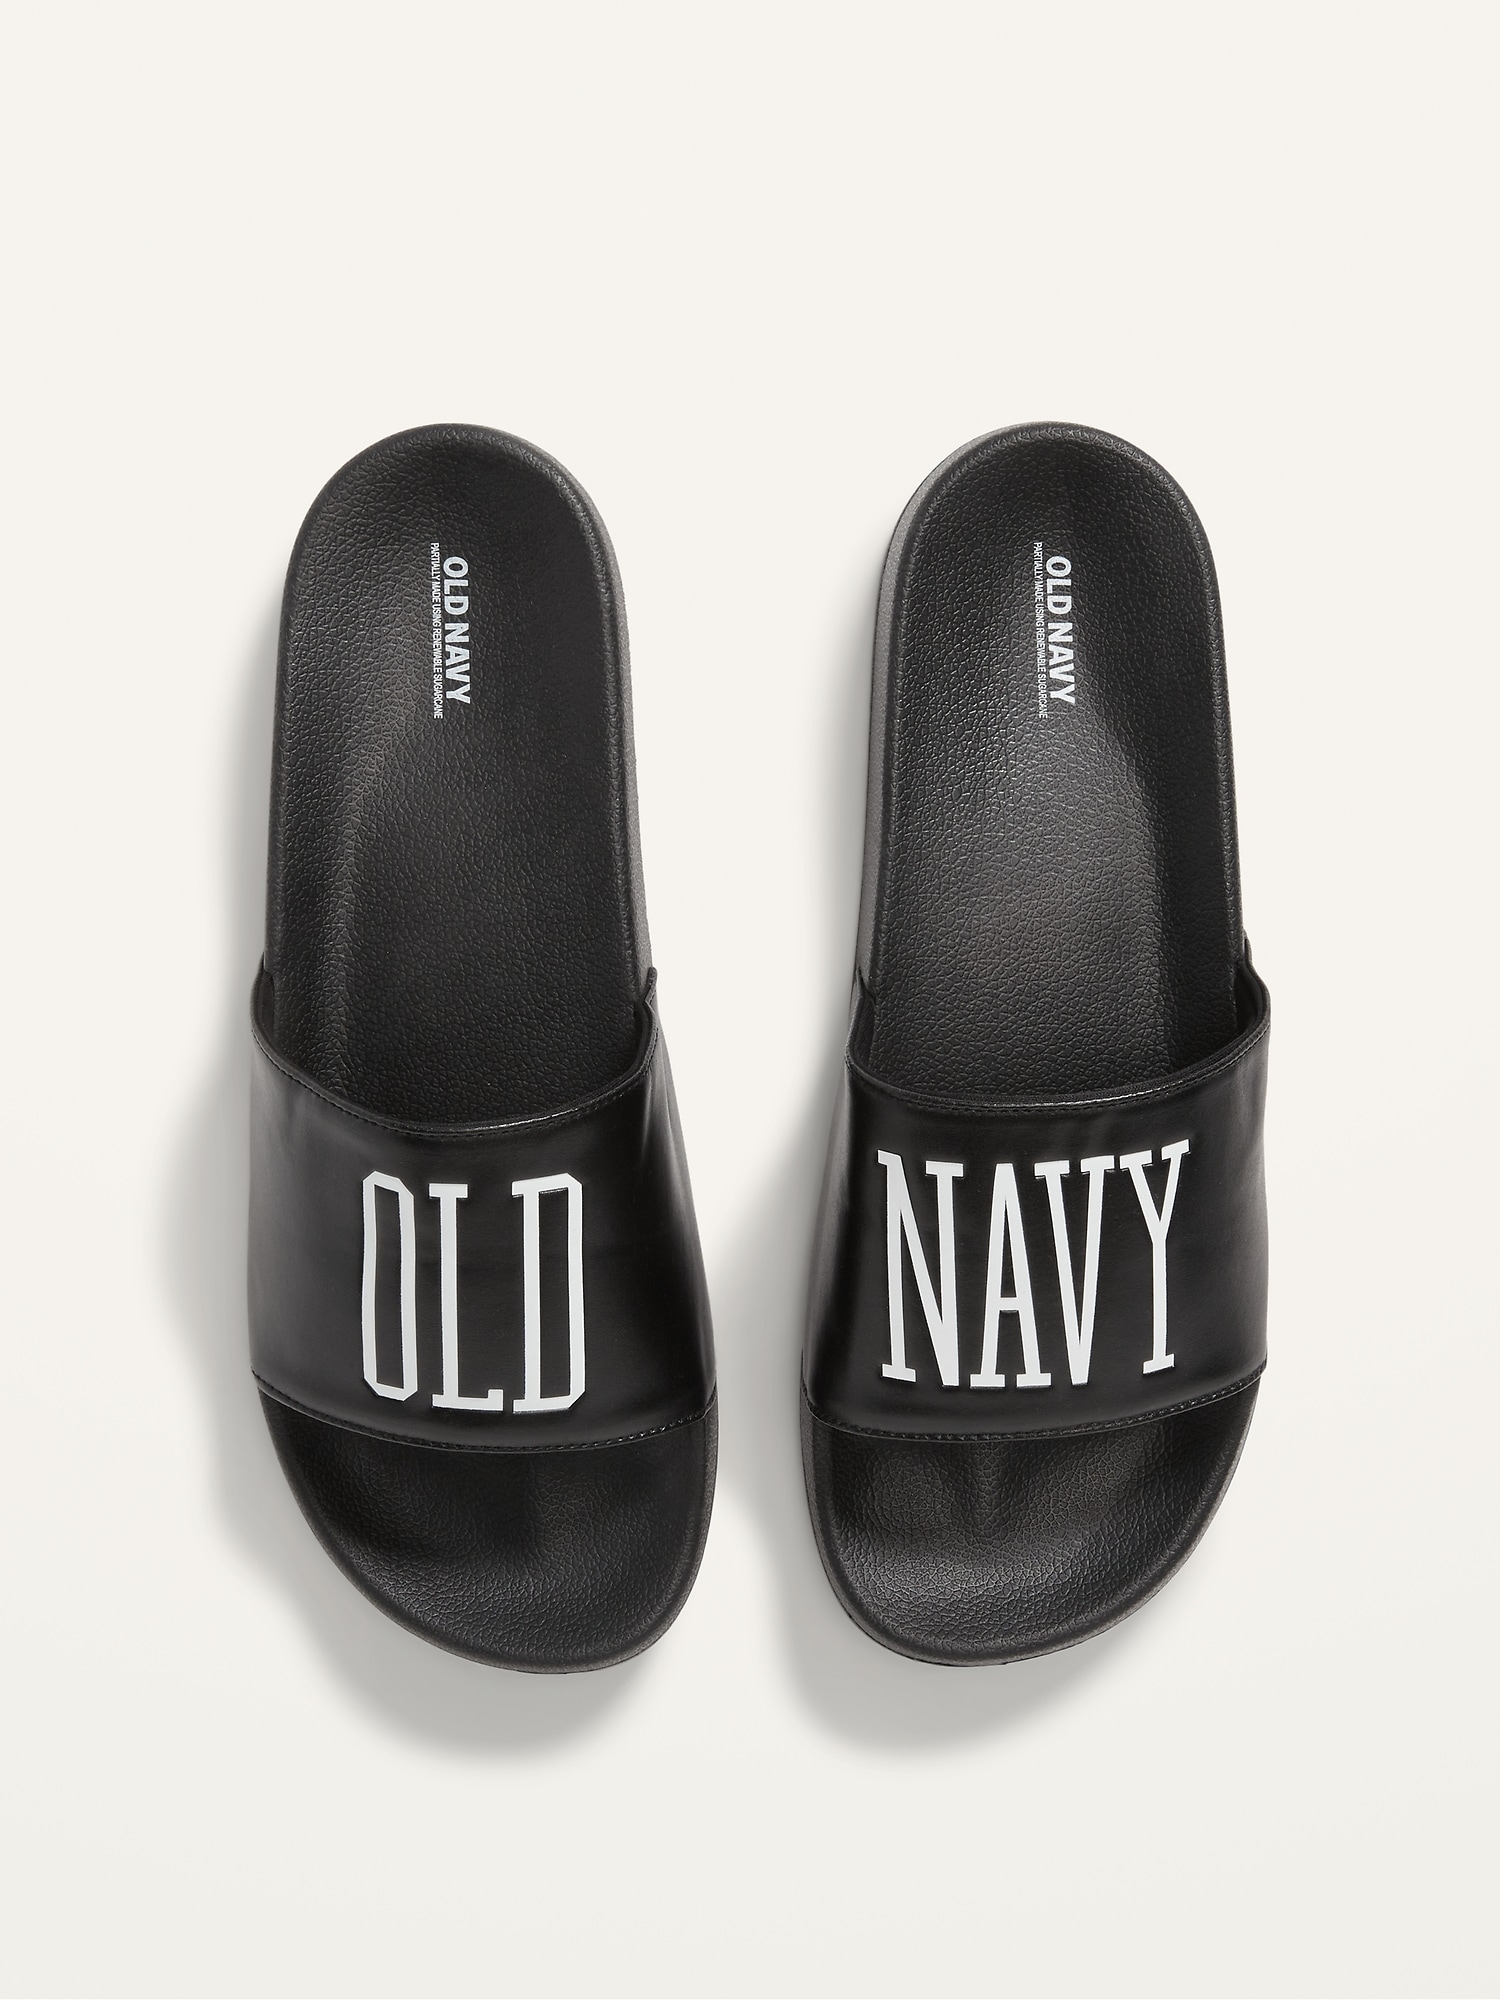 Old Navy Men's Slide Sandals (3 Colors, Select Sizes)